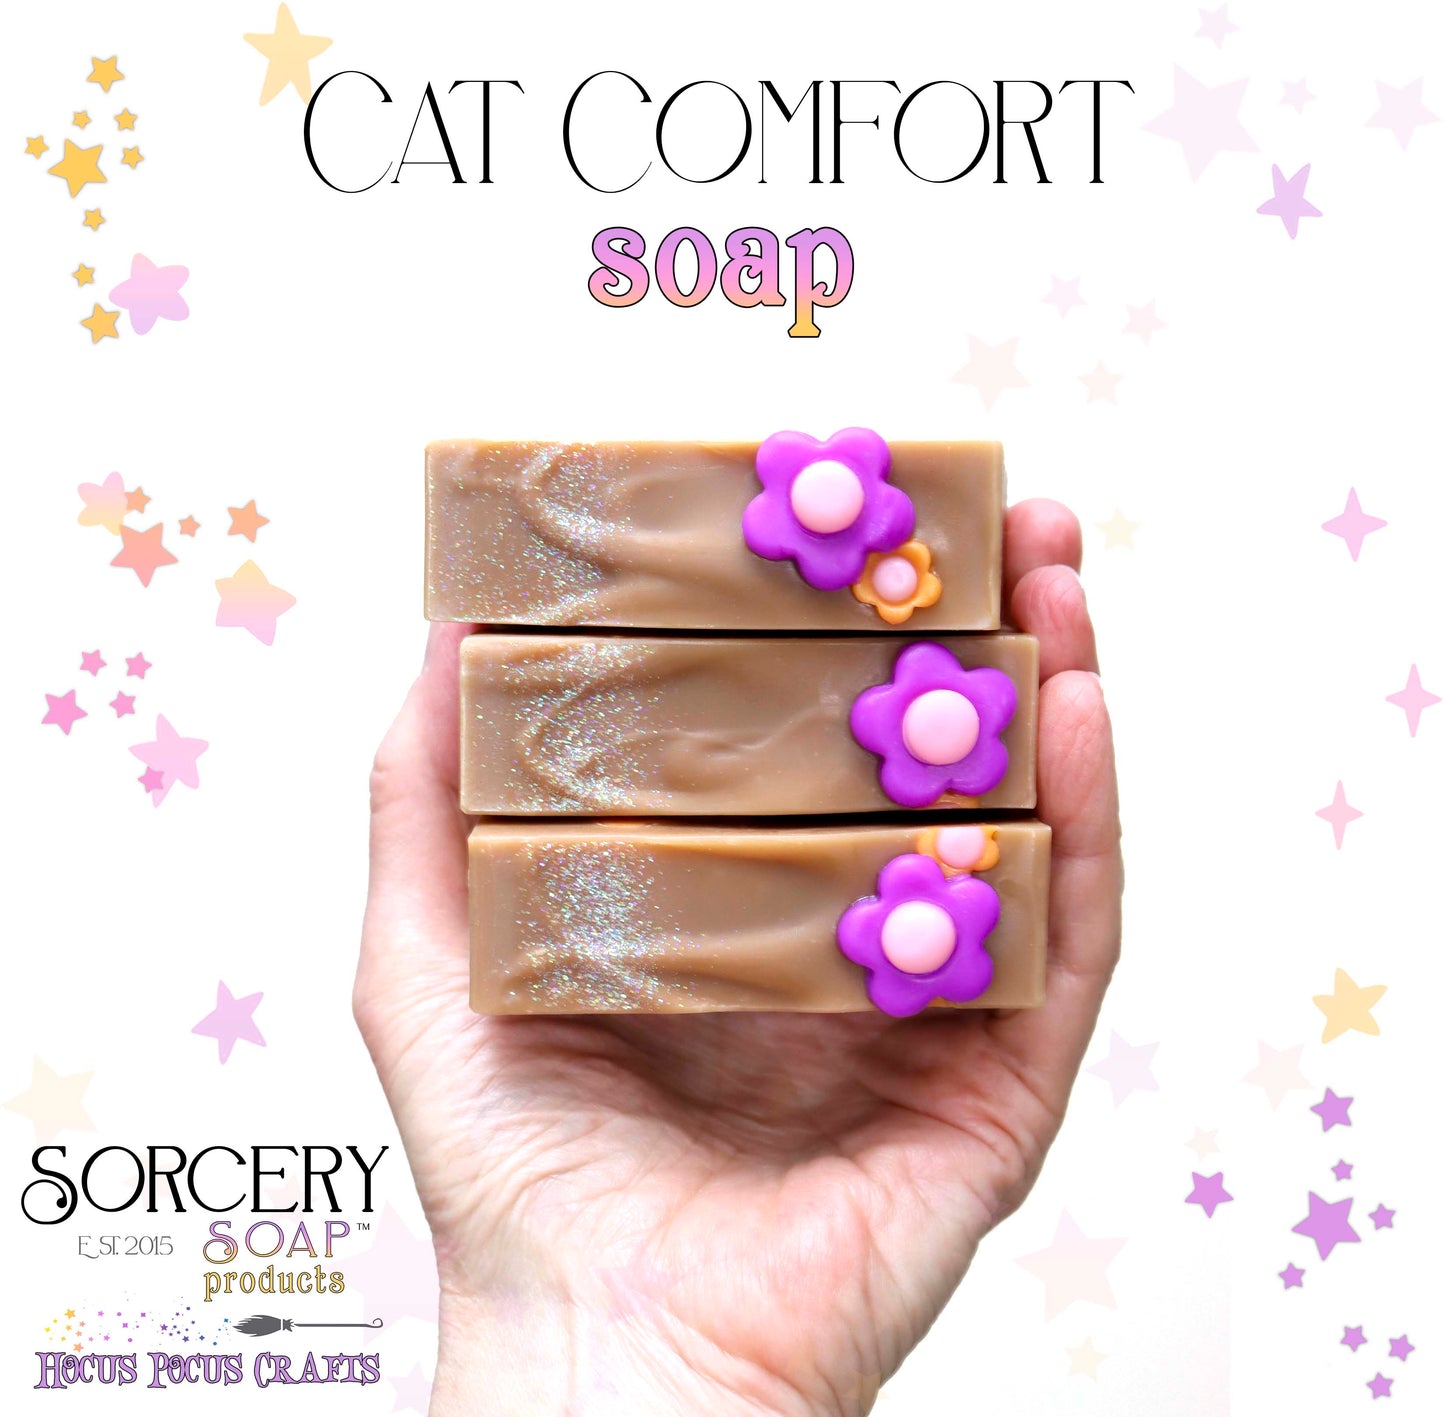 Cat Comfort Soap